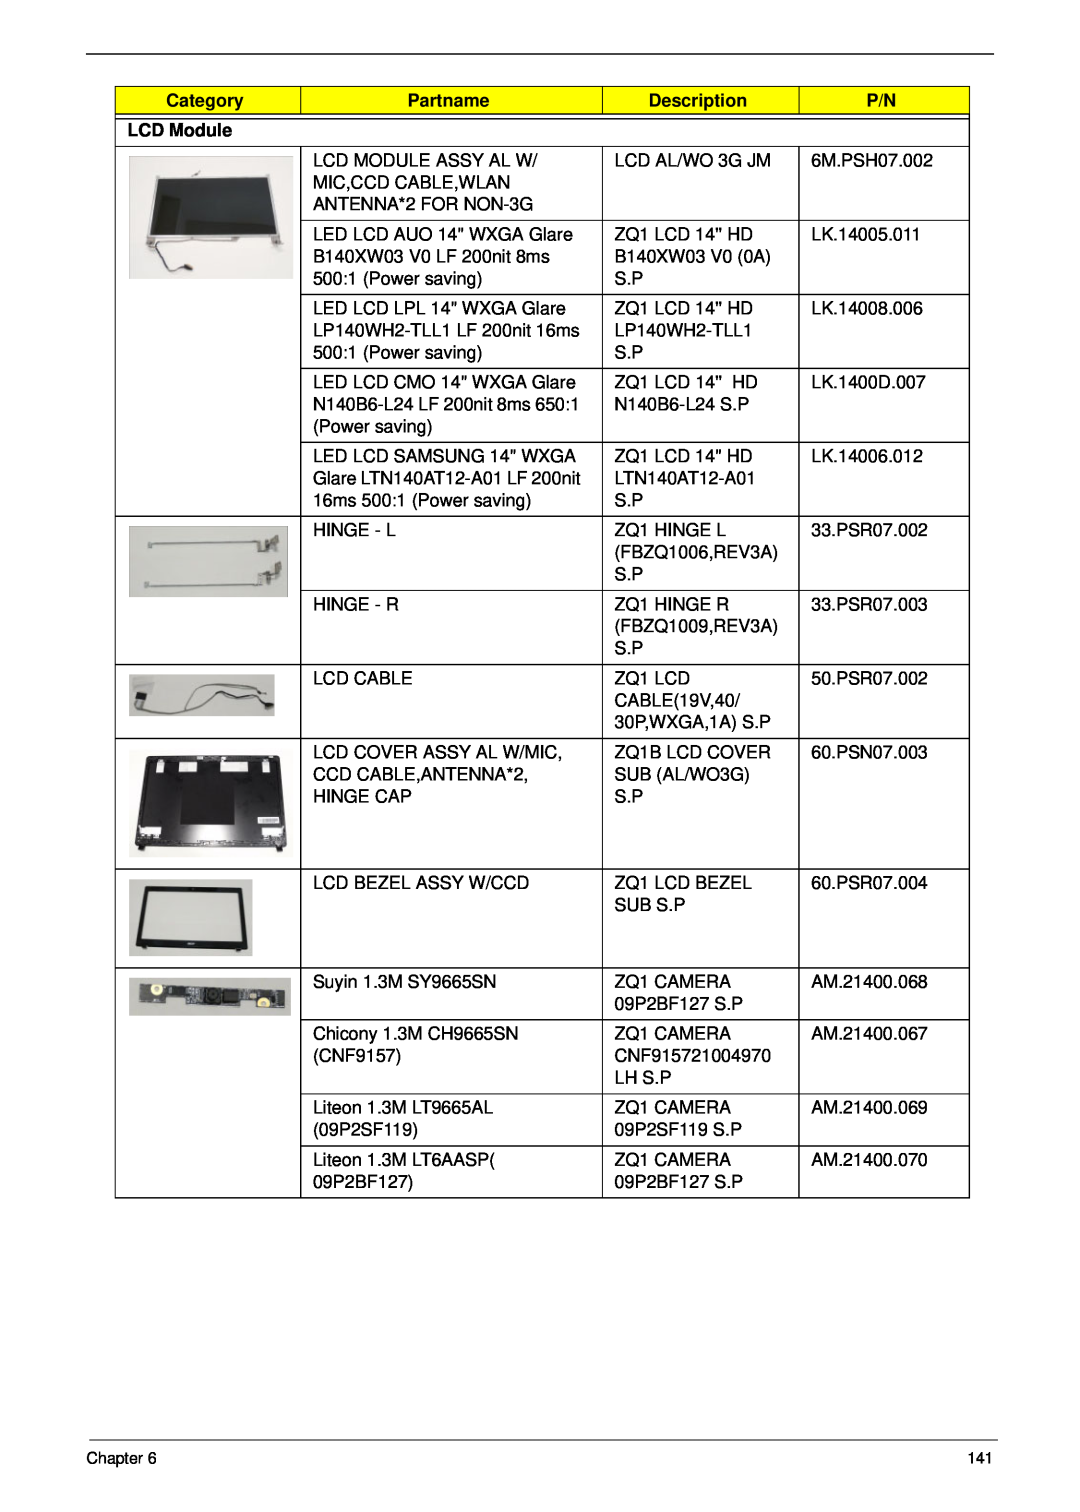 Aspire Digital 4625G manual Category, Partname, Description, LCD Module 